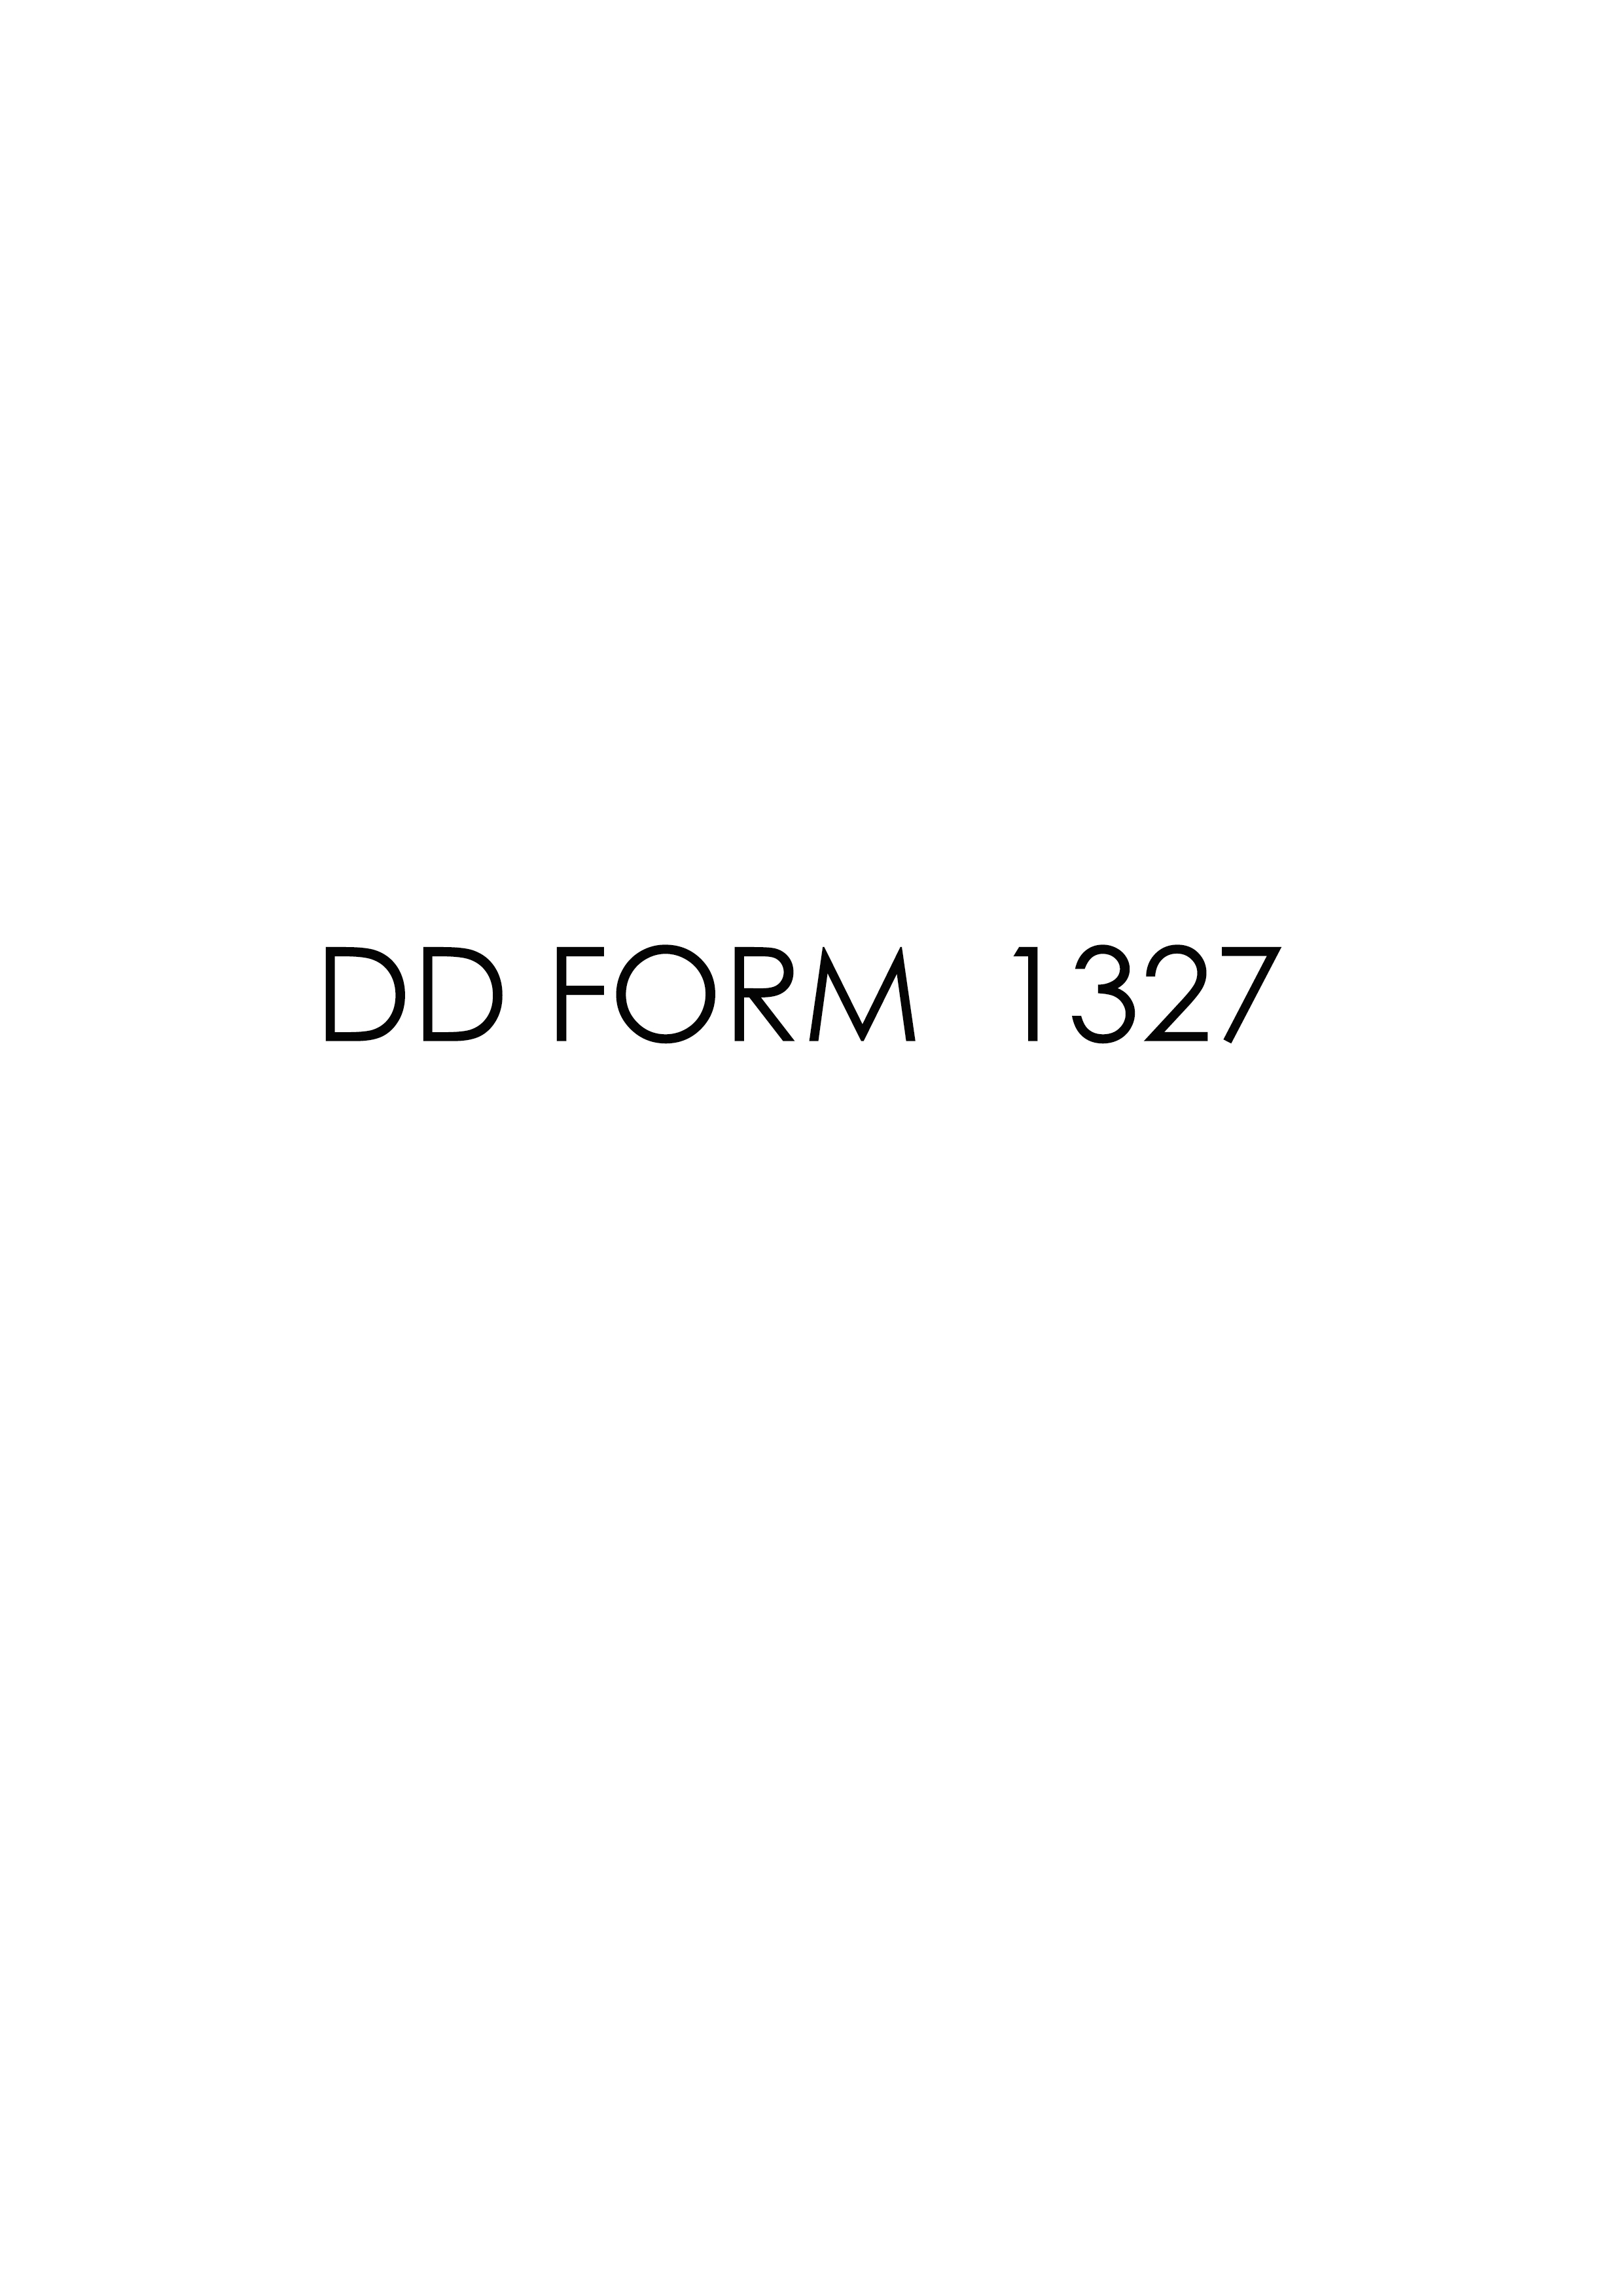 Download dd 1327 Form